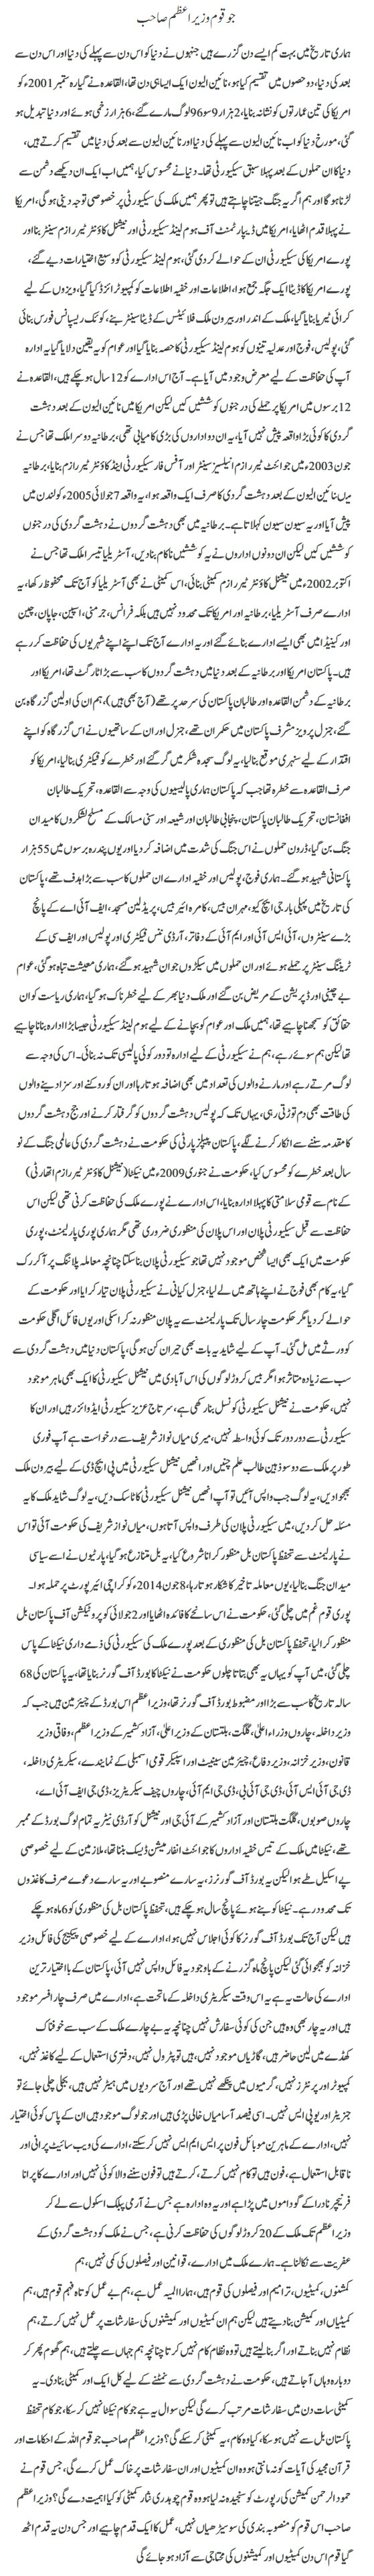 Jo Qoum Wazir e Azam sahib by Javed Chaudhry